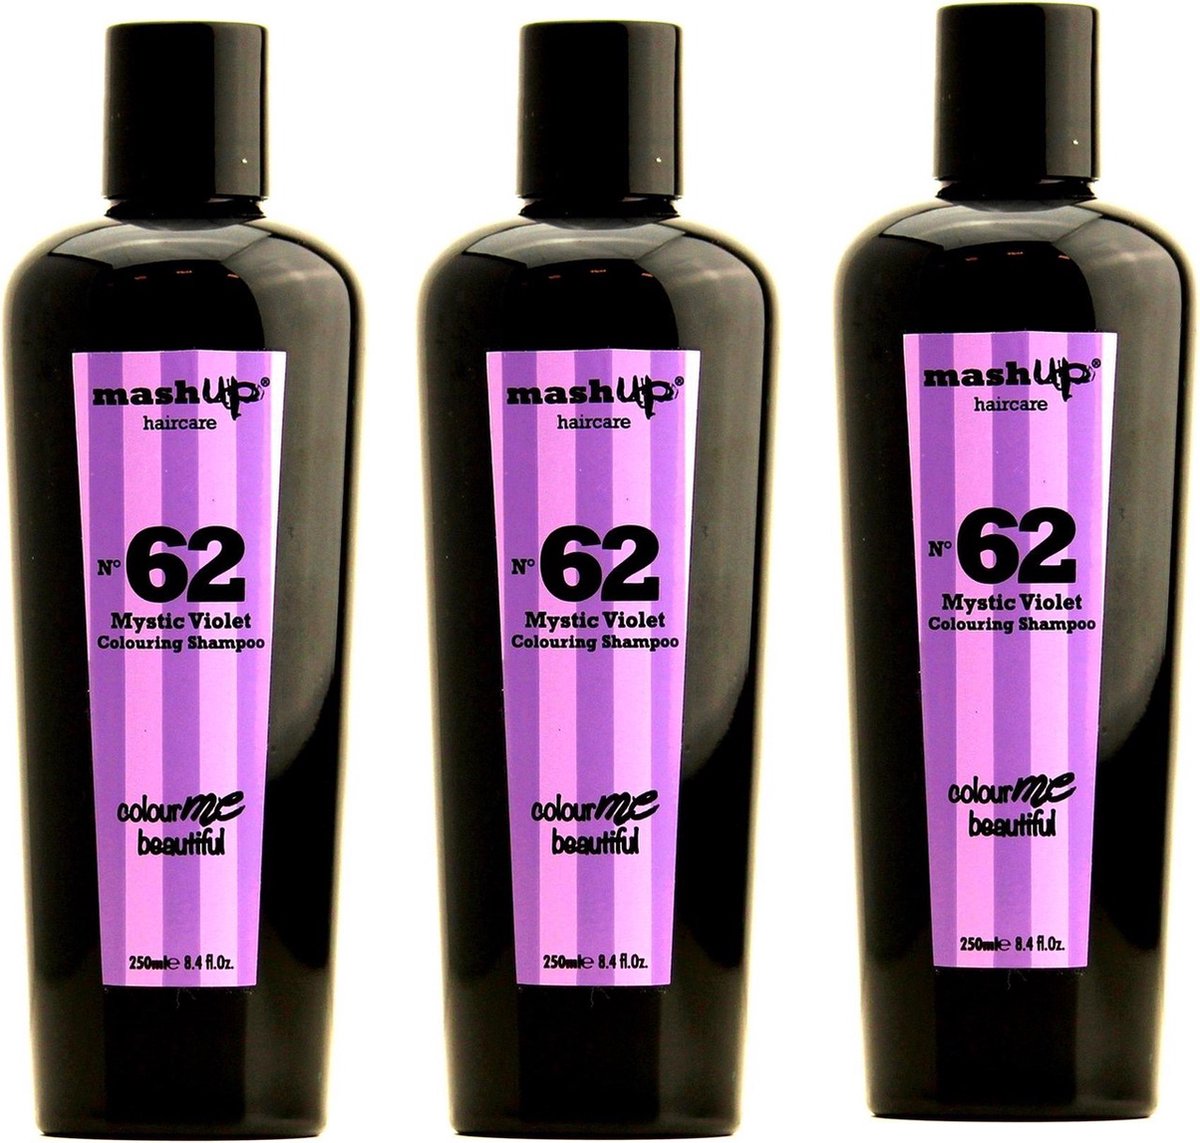 mashUp haircare Colour Me Beautiful N° 62 Mystic Violet Colouring Shampoo 250ml - 3 stuks